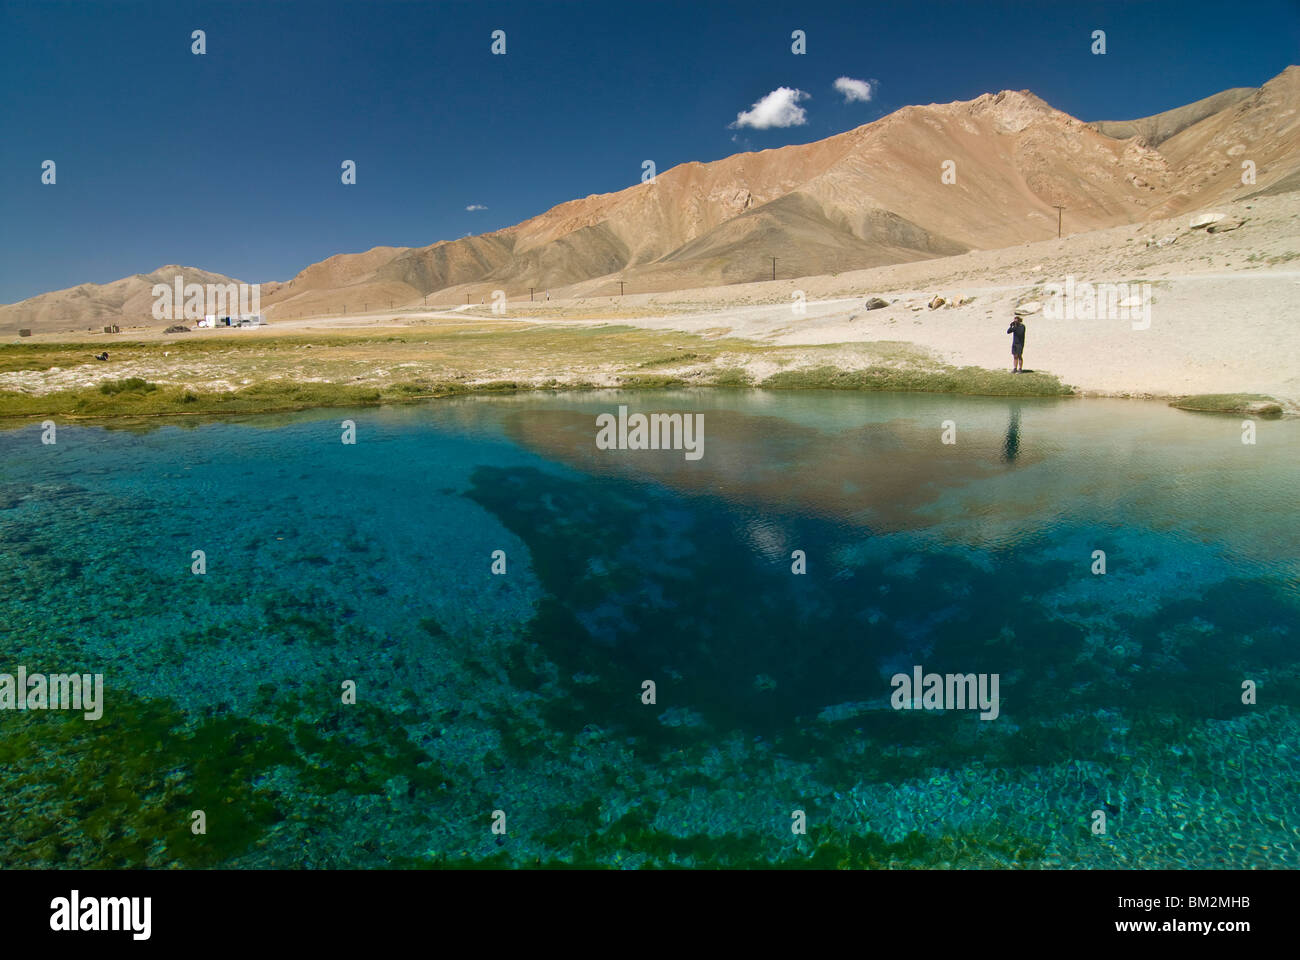 Spring Ak Balyk, the Pamirs, Tajikistan Stock Photo